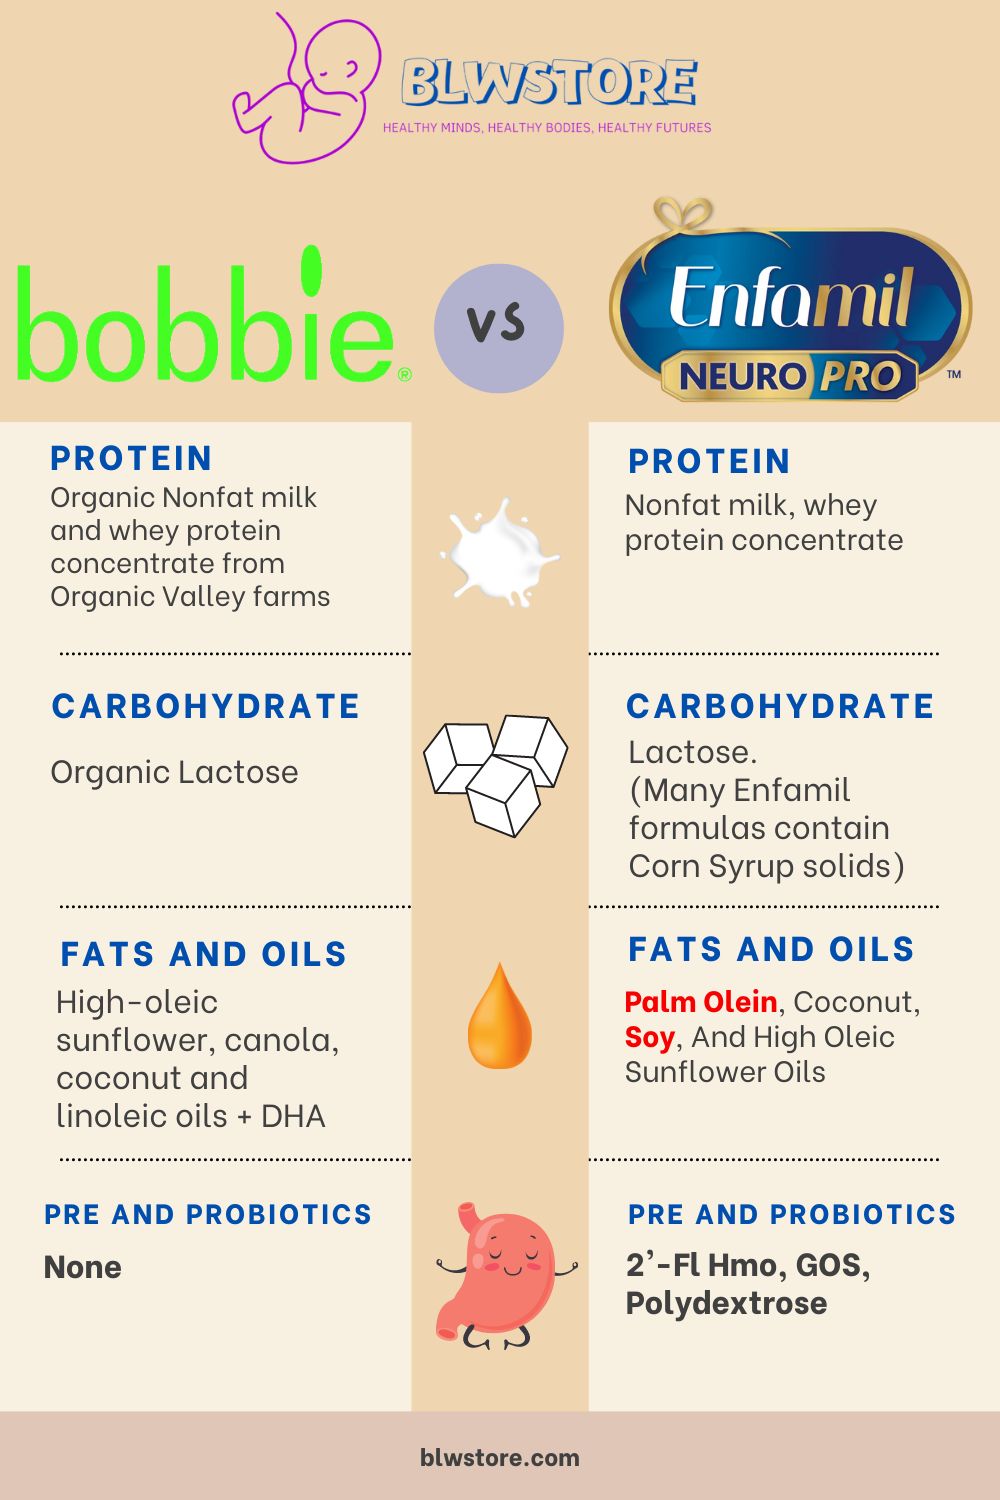 Bobbie vs Enfamil Neuropro Infographic